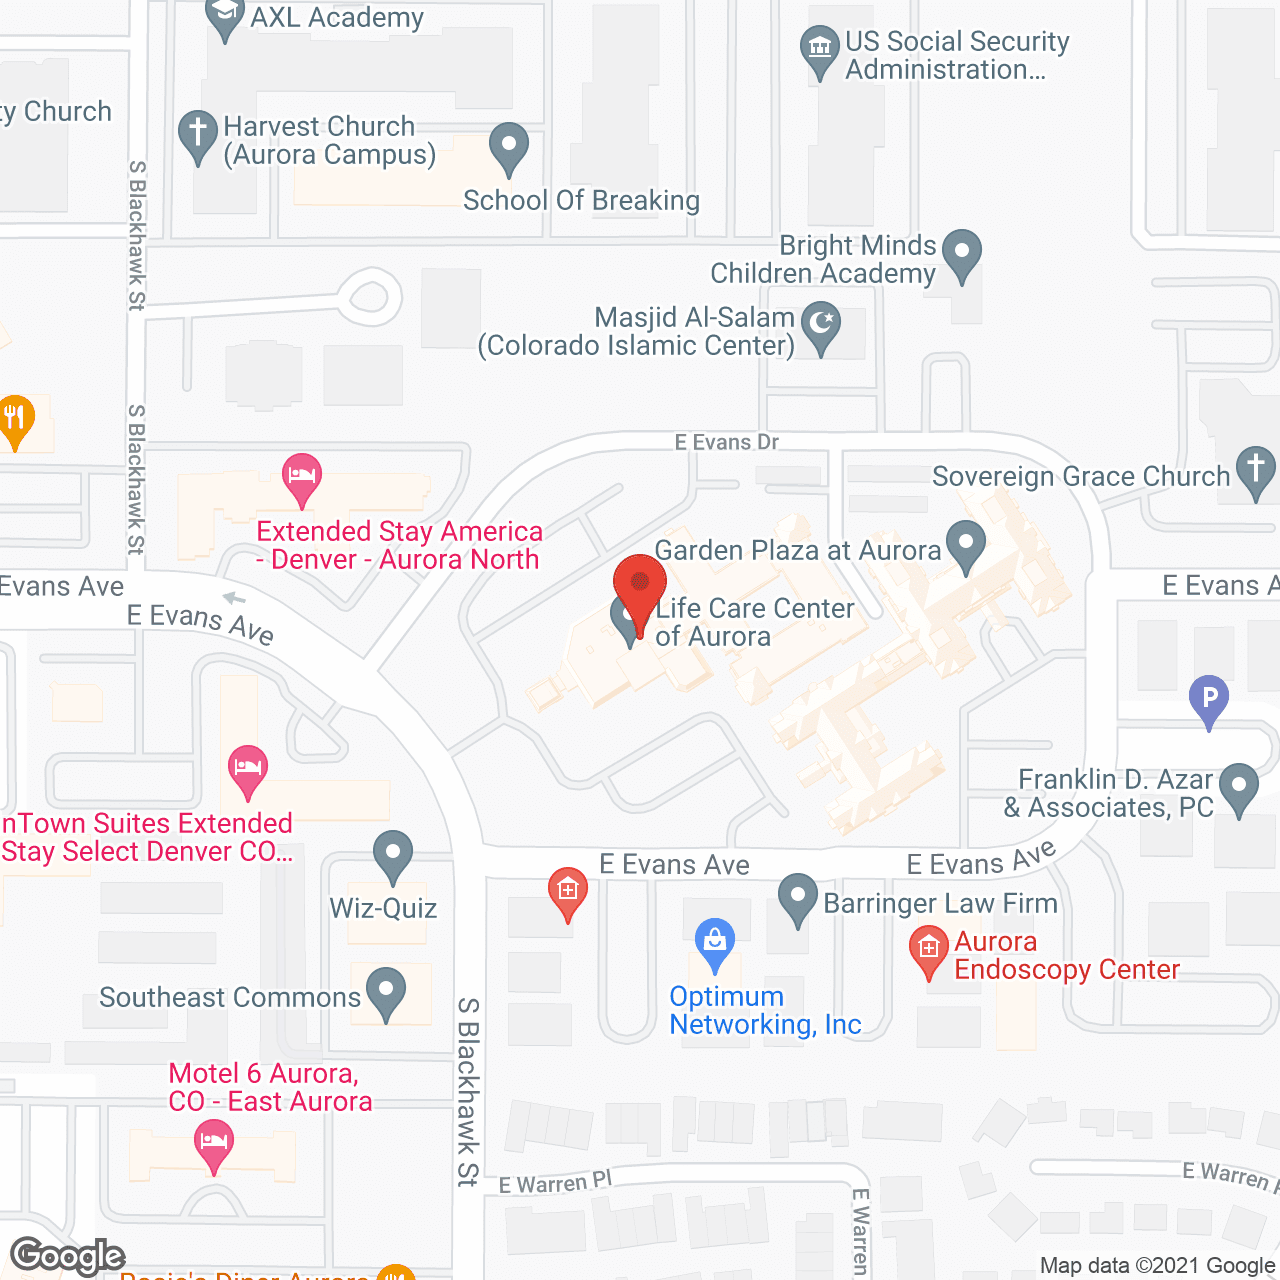 Life Care Center of Aurora in google map